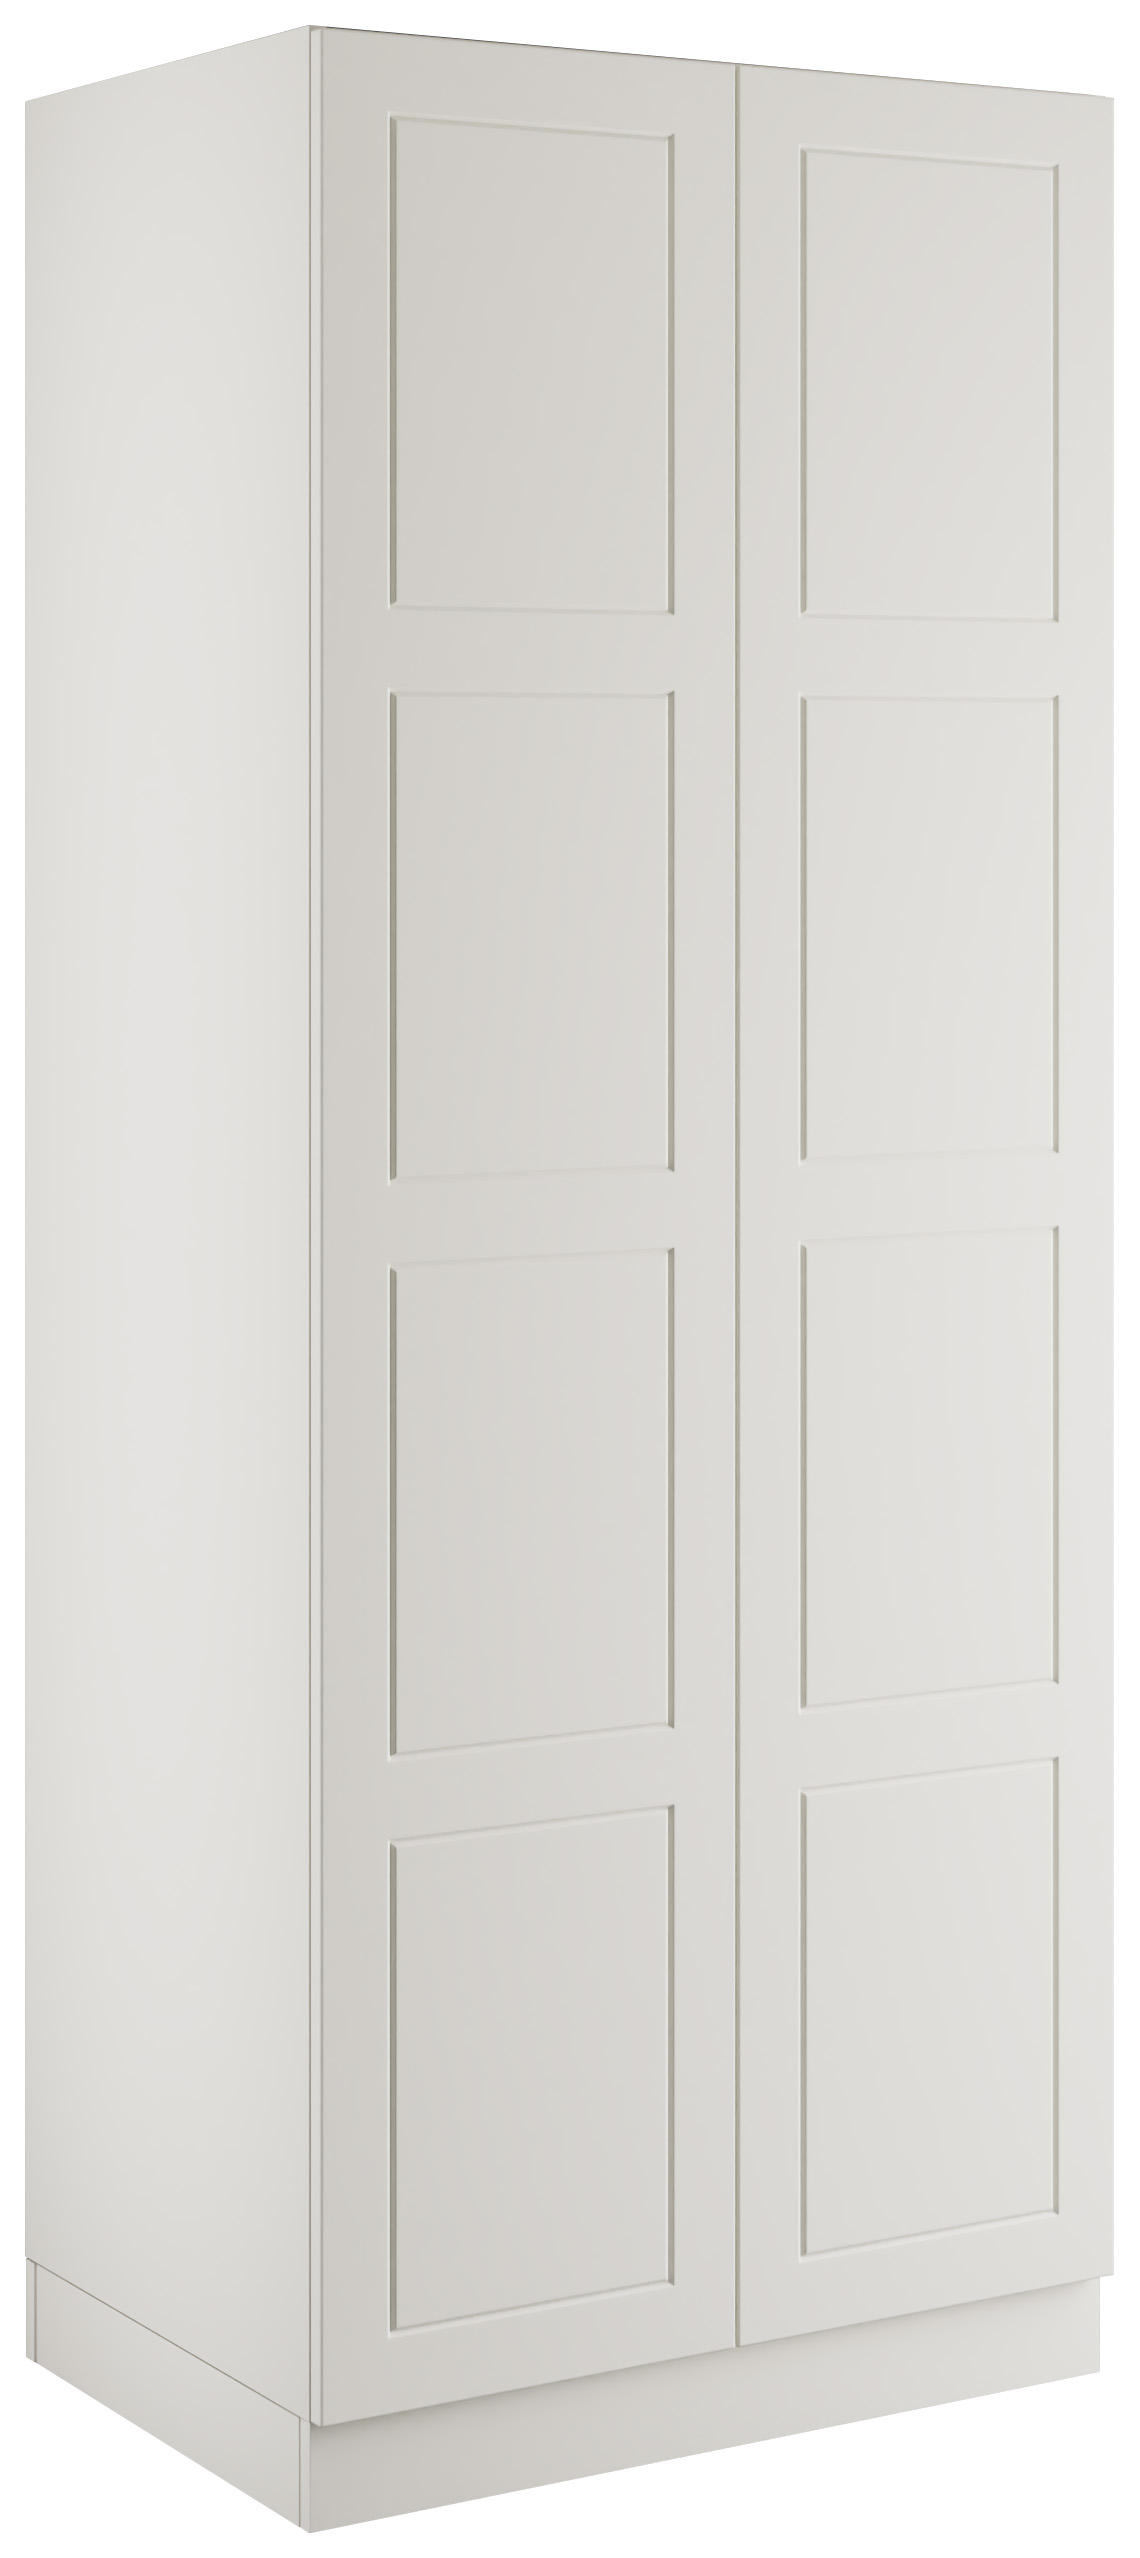 Bramham White Double Wardrobe with Single Rail & Internal Drawers - 900 x 2260 x 608mm